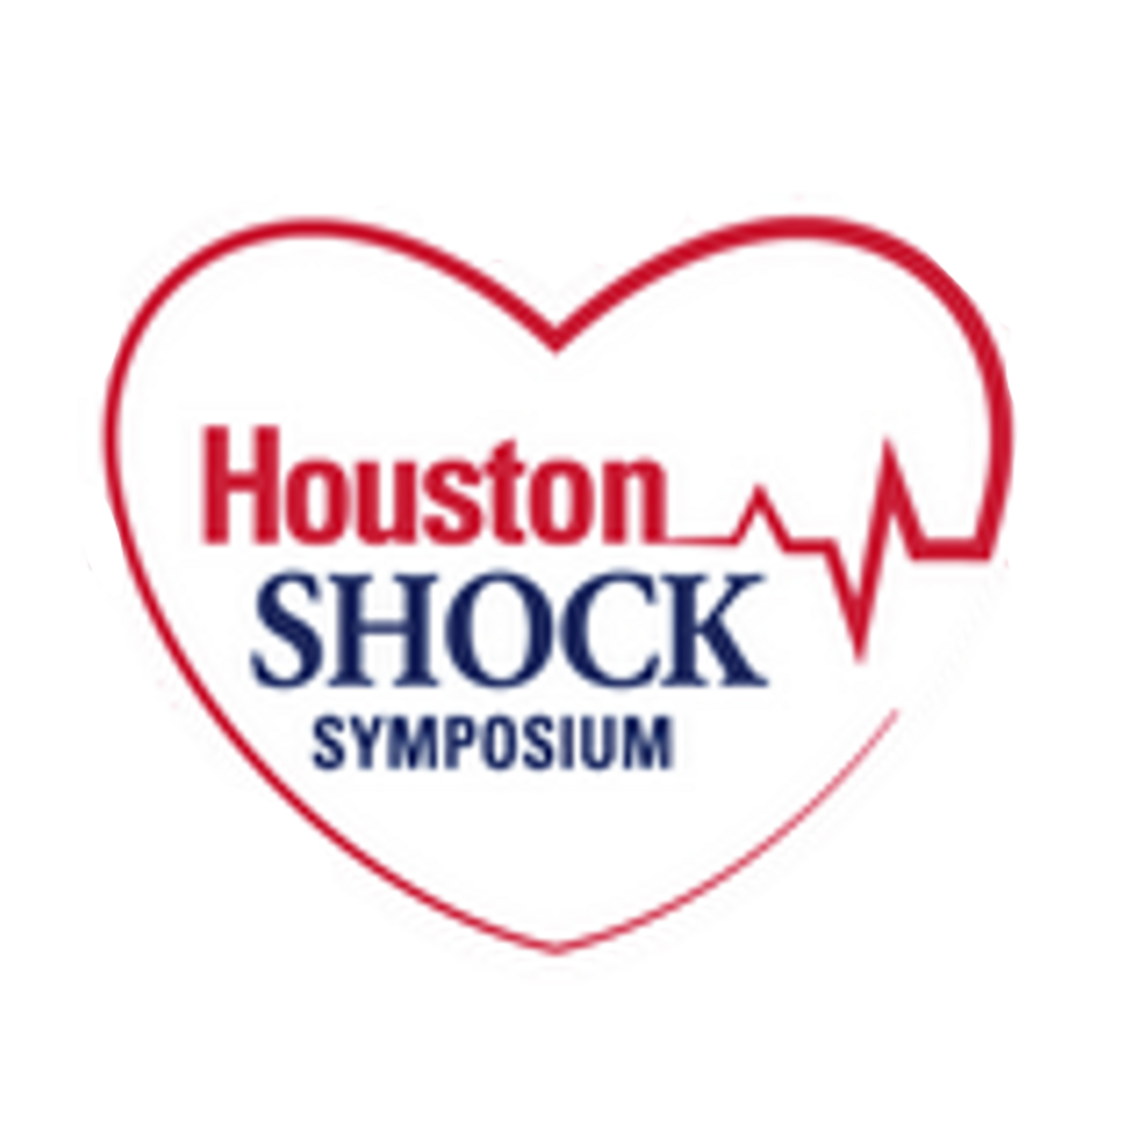 Houston SHOCK Symposium Logo